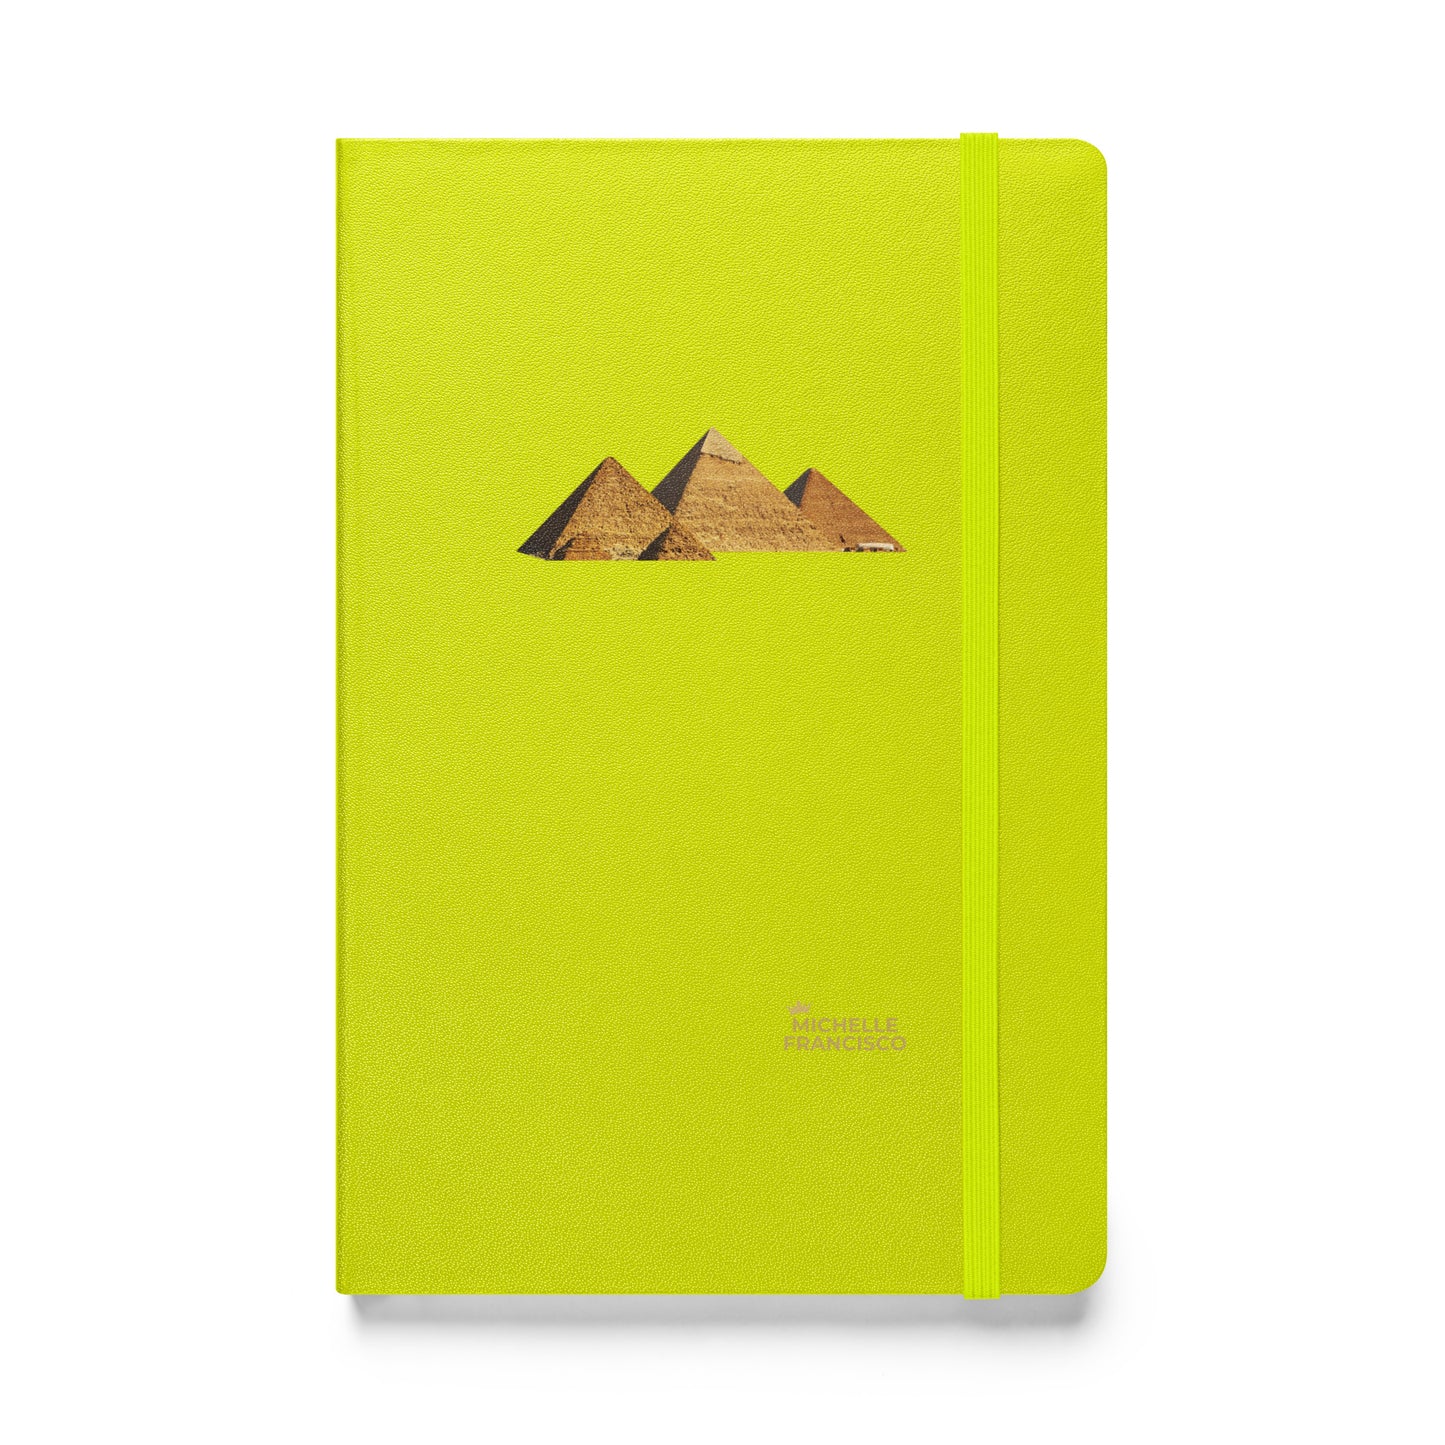 Pyramids Hardcover Bound Notebook